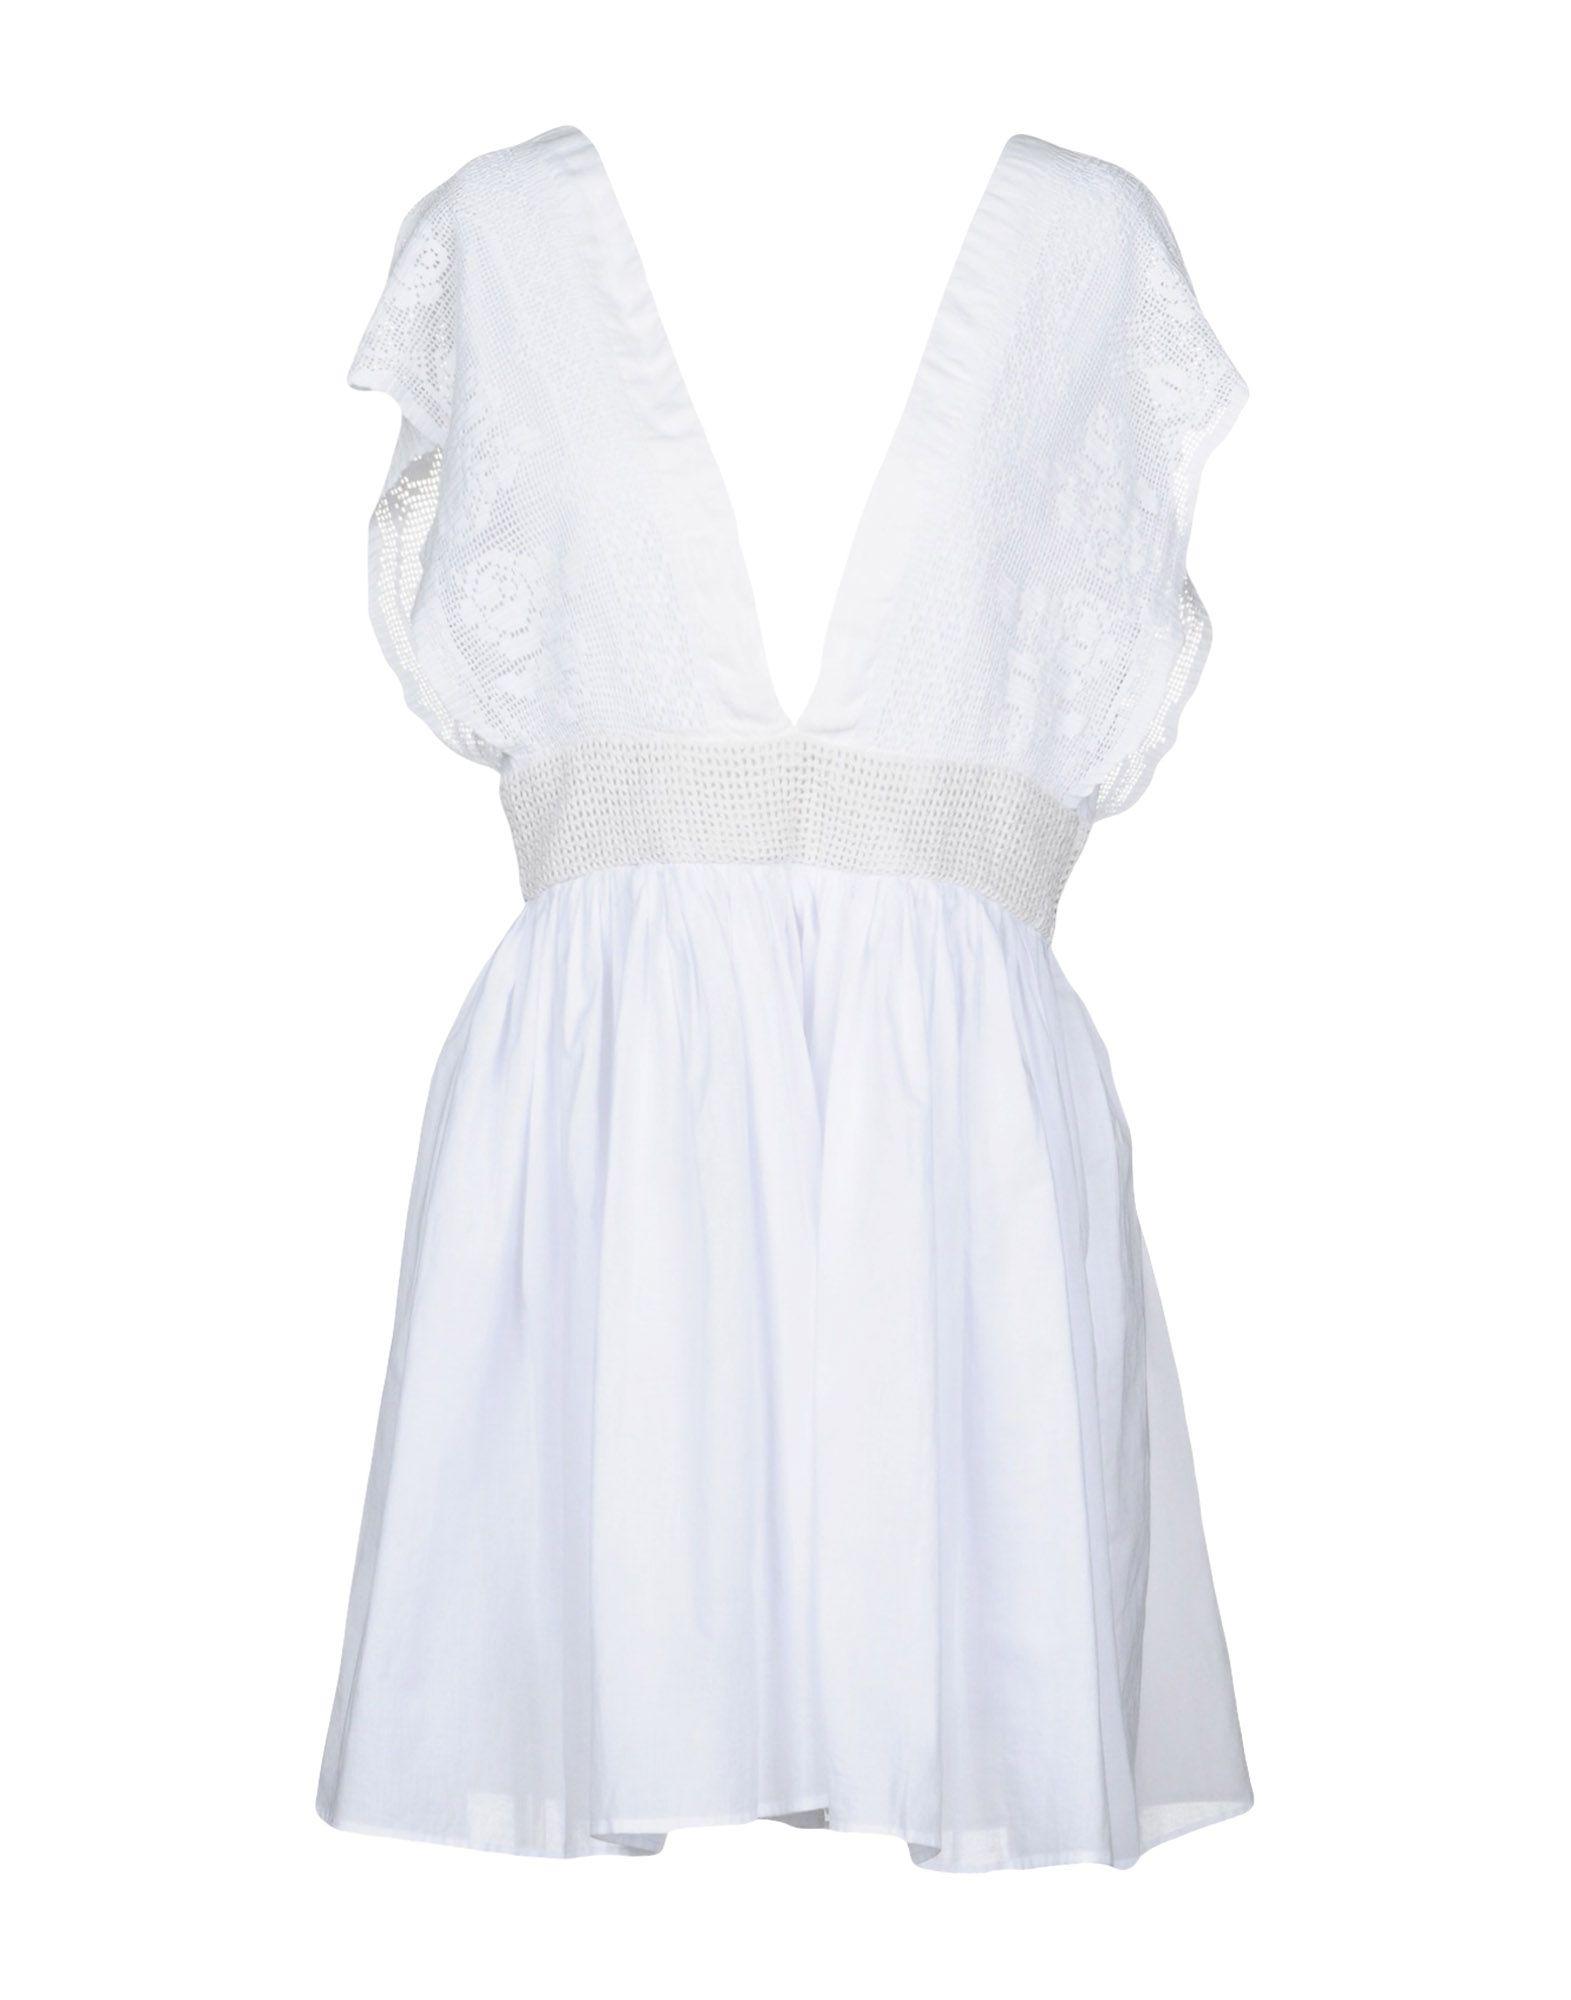 plain white short dress